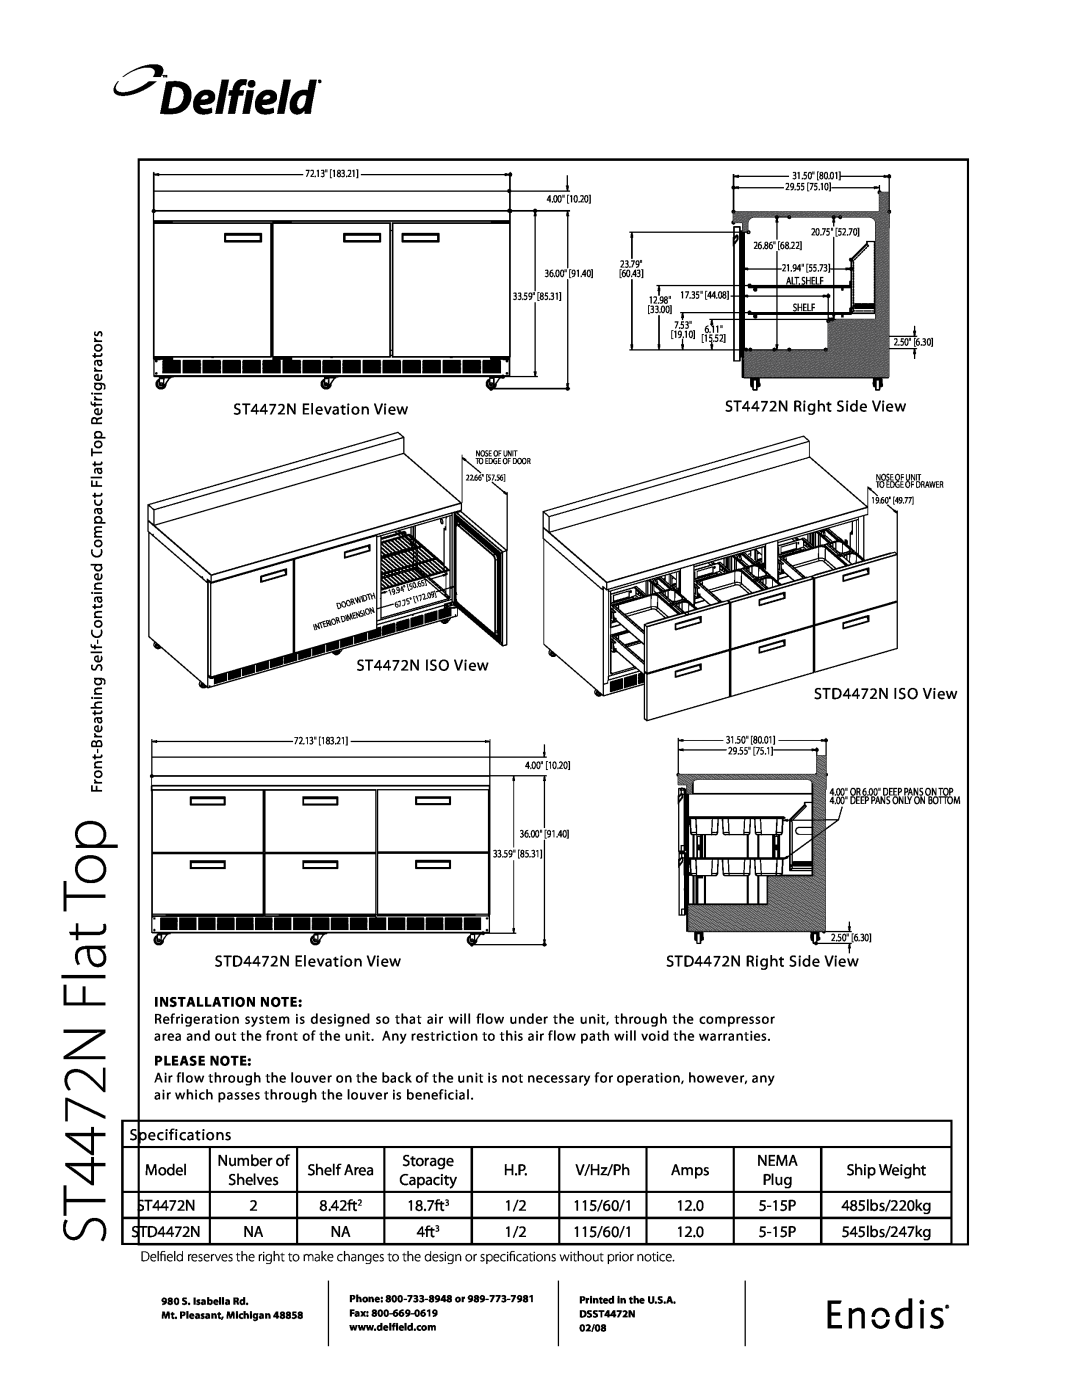 Delfield STD4472N-S specifications ST4472N, Delfield, Installation Note, Please Note 